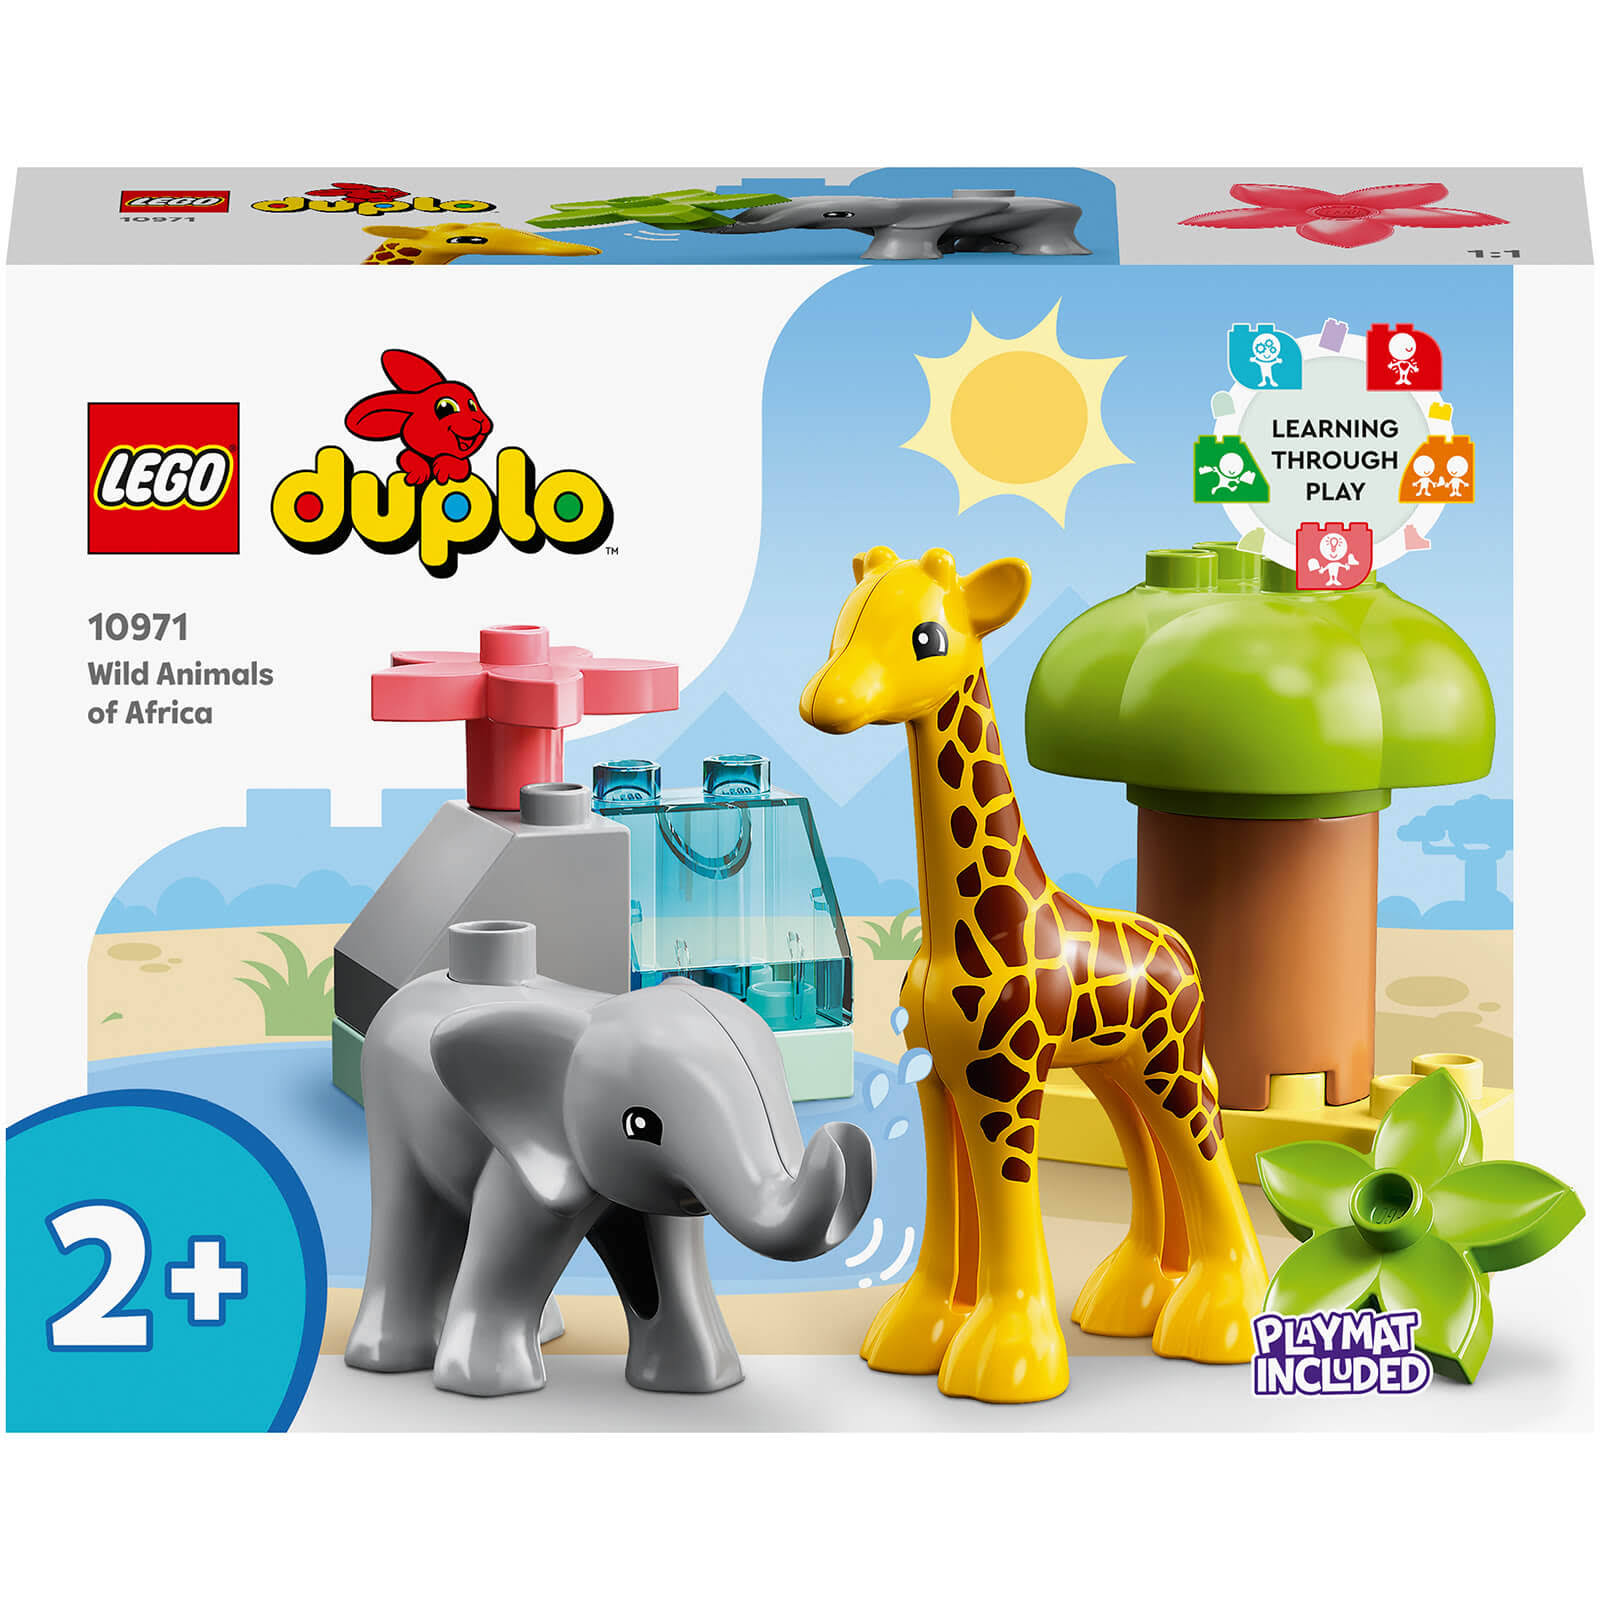 LEGO Duplo Wild Animals of Africa 10971 Safari Building Toy Set for